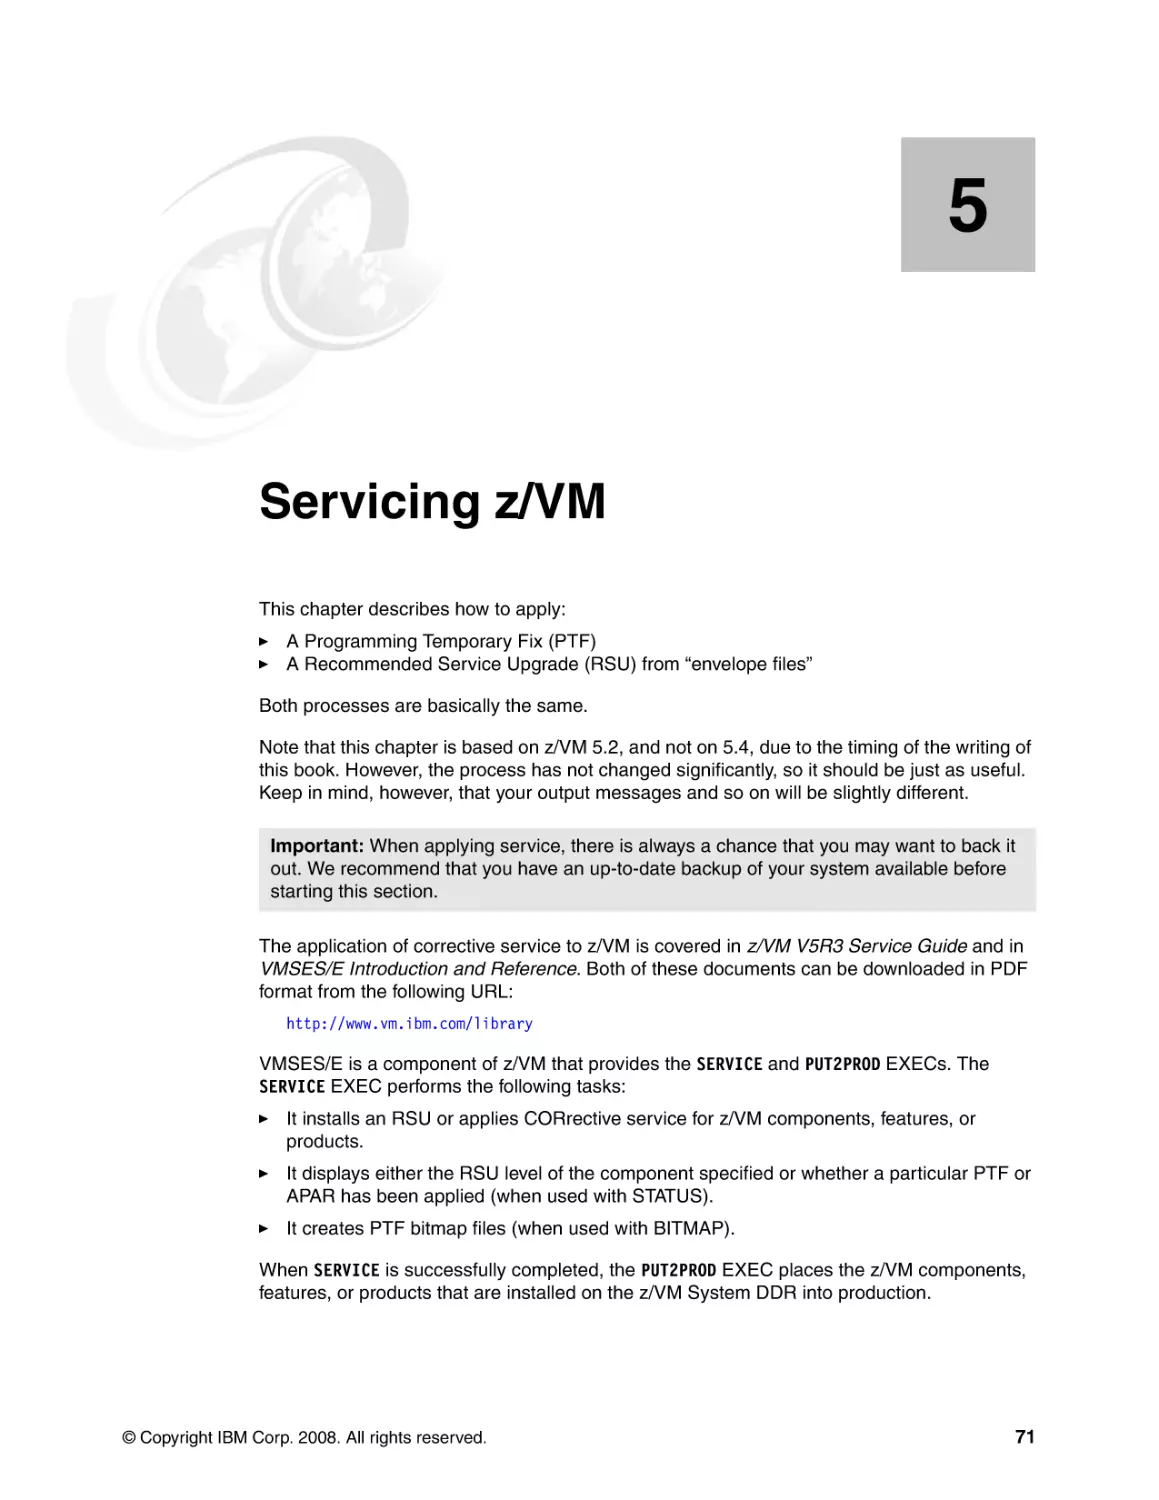 Chapter 5. Servicing z/VM